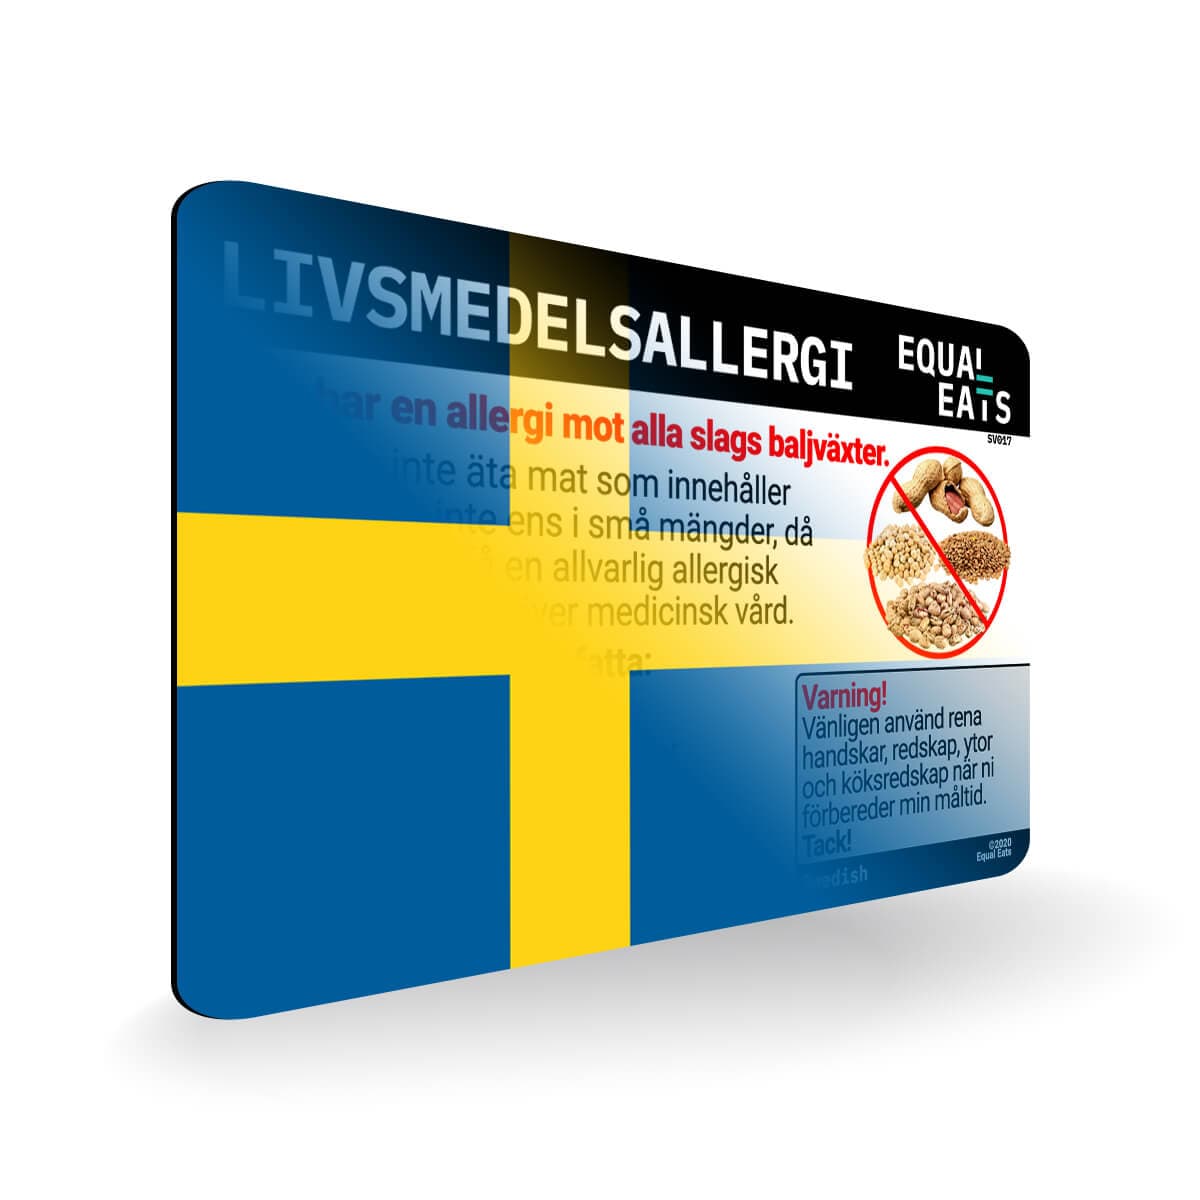 Legume Allergy in Swedish. Legume Allergy Card for Sweden